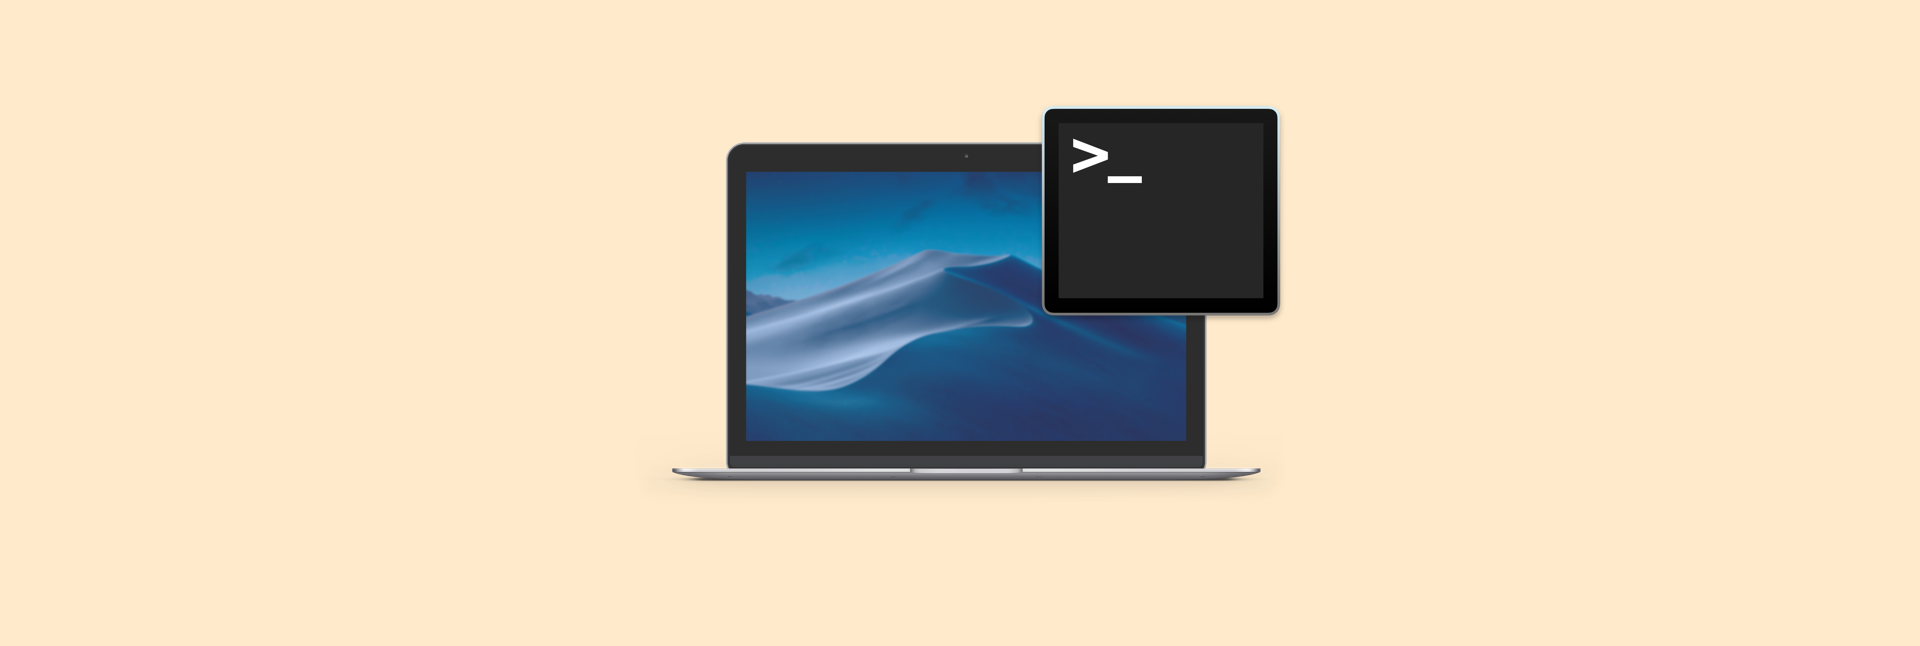 terminal program c for mac